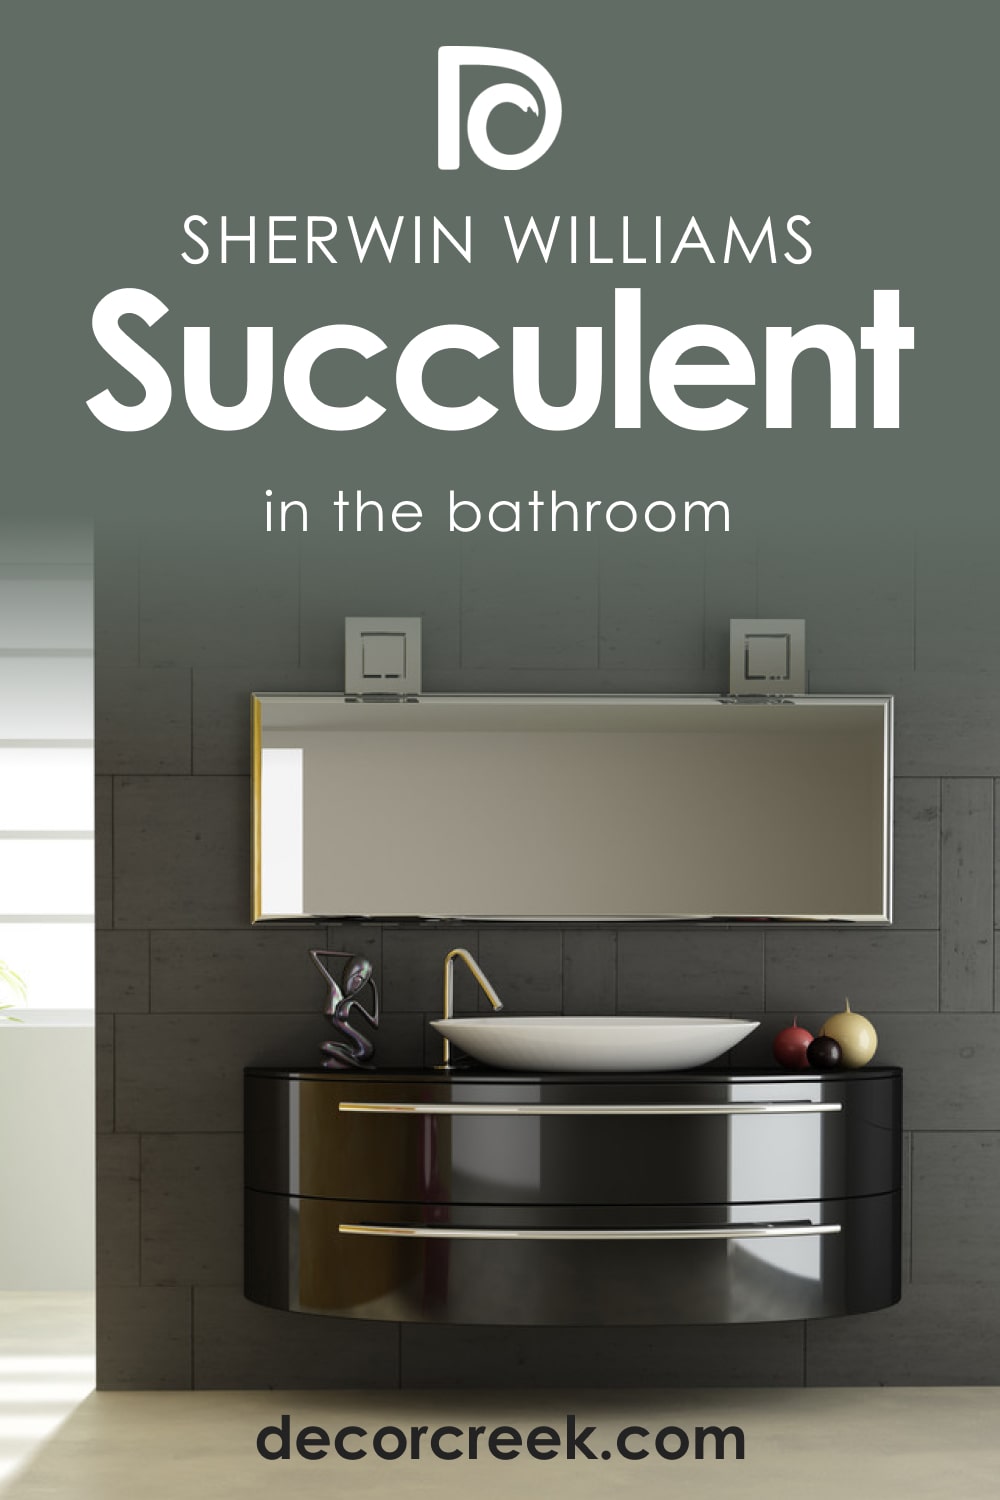 Succulent SW-9650 in the Bathroom